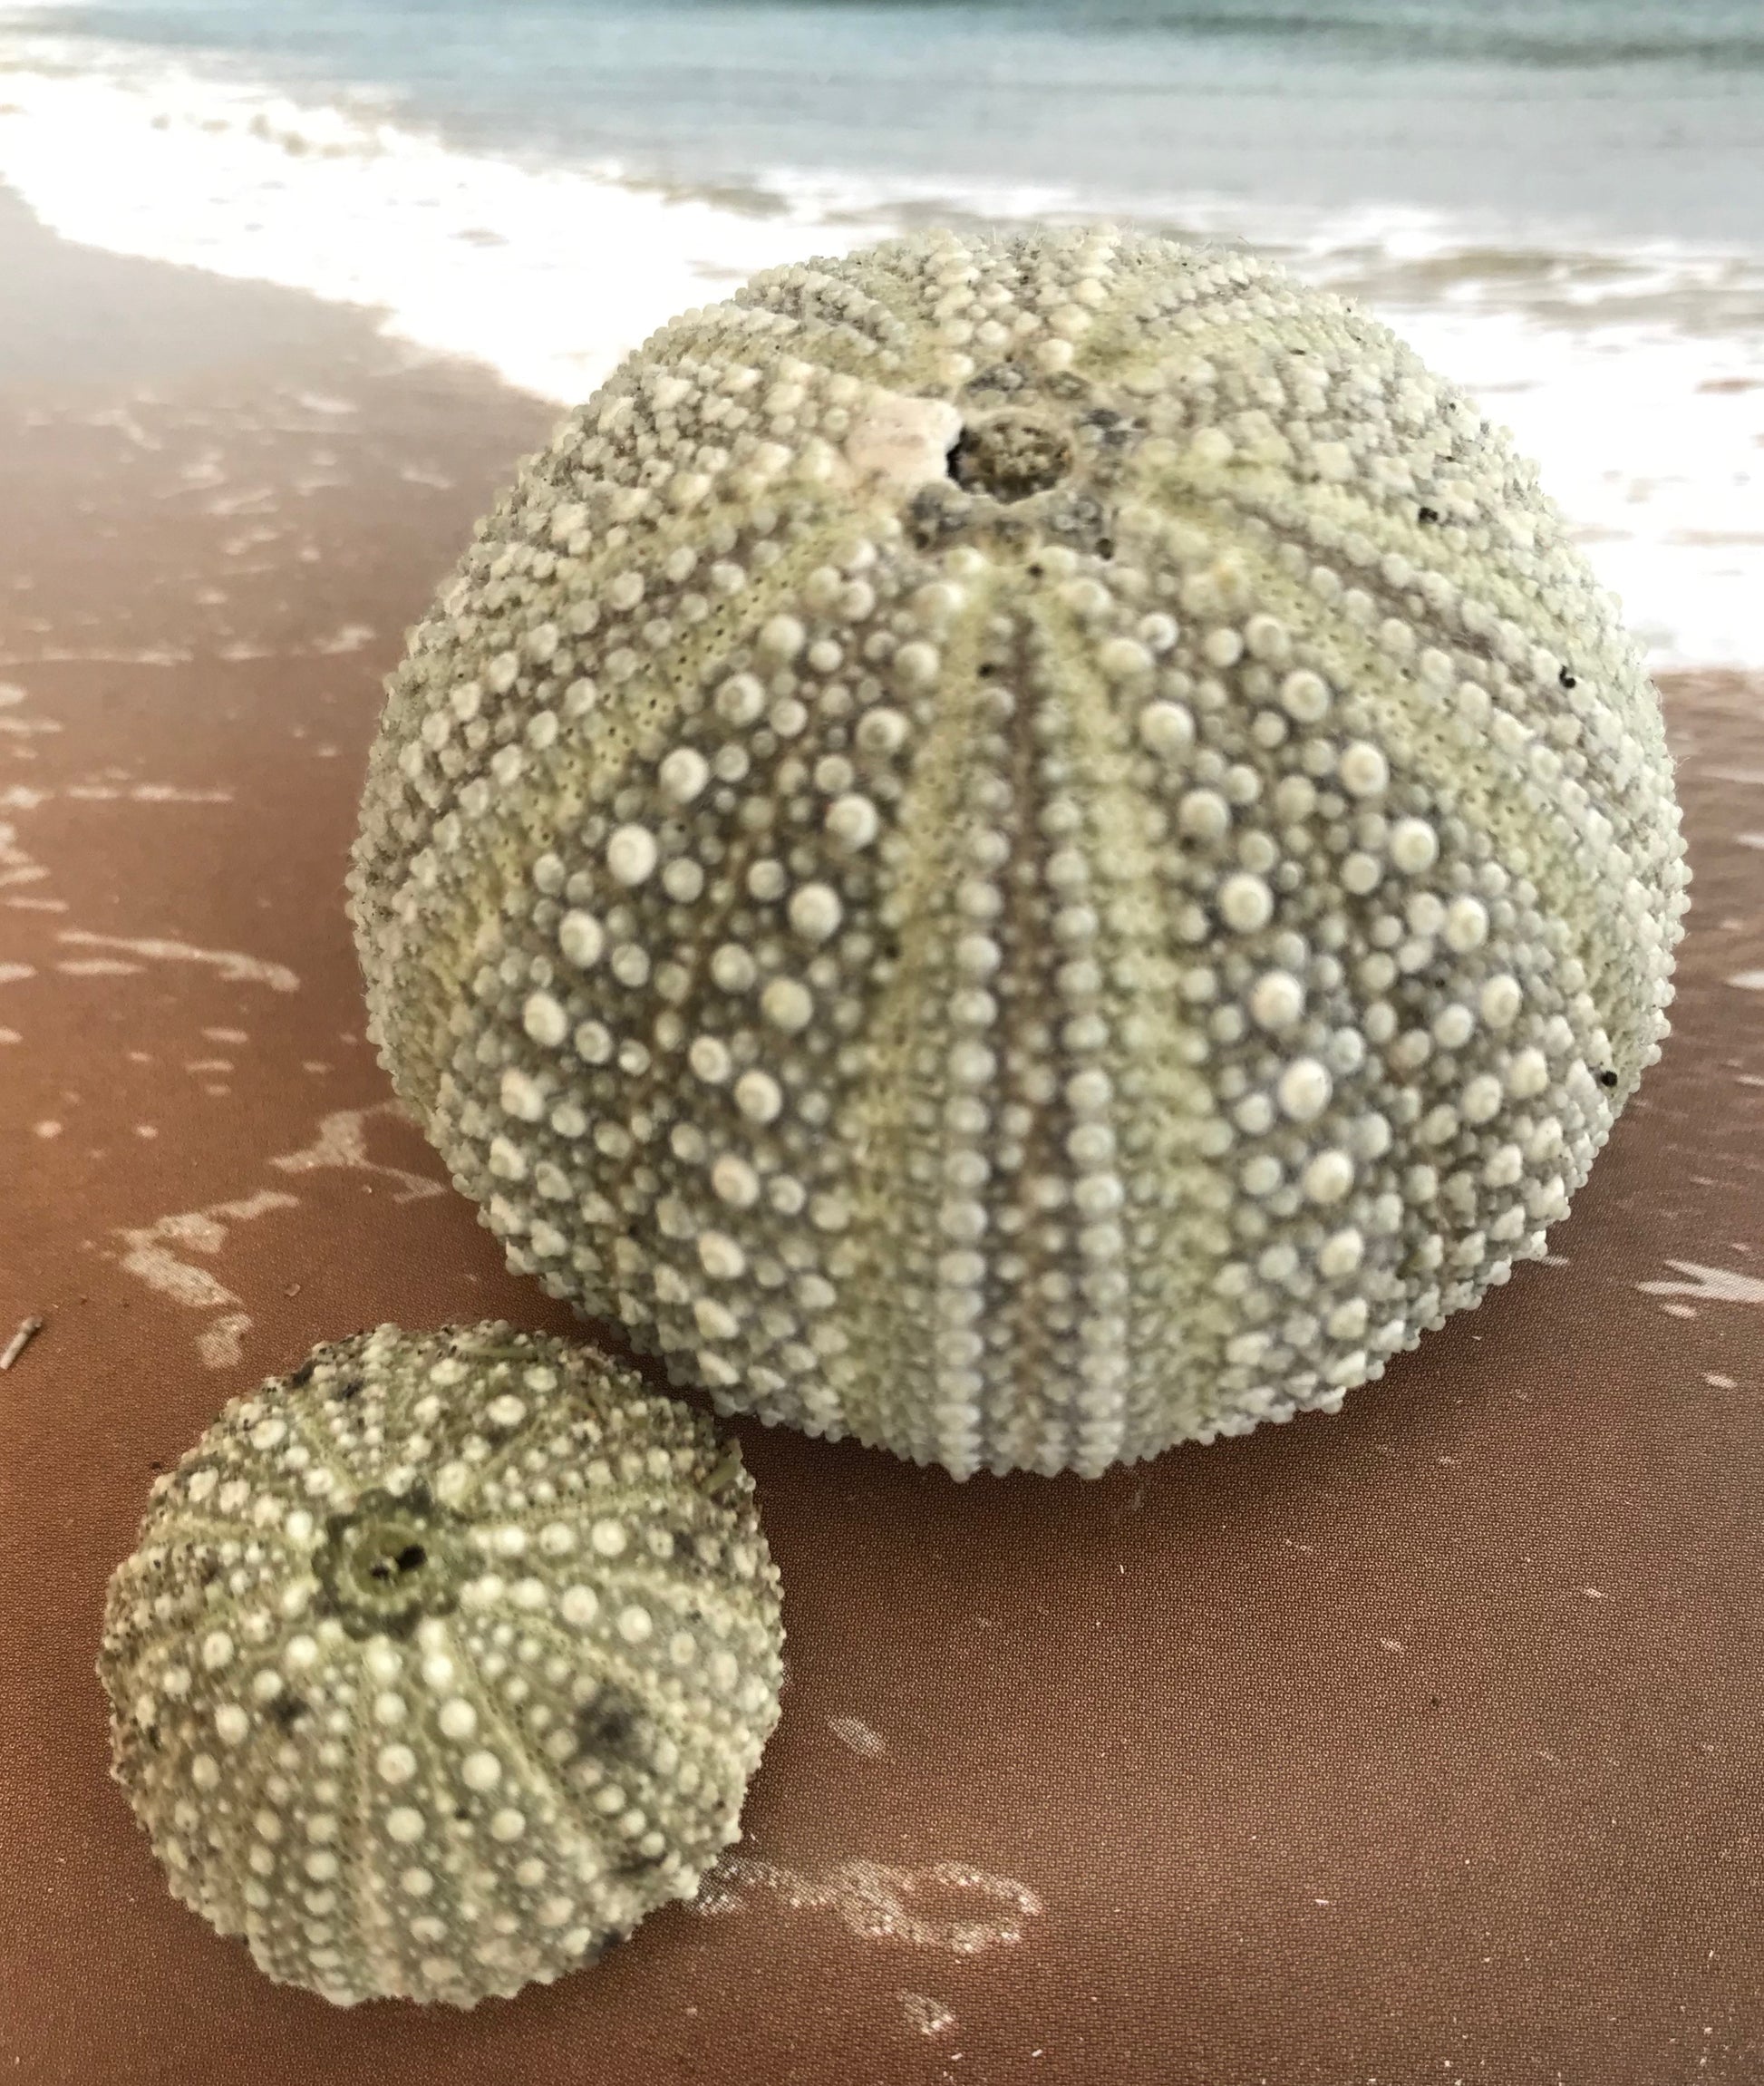 Sea urchins Gower